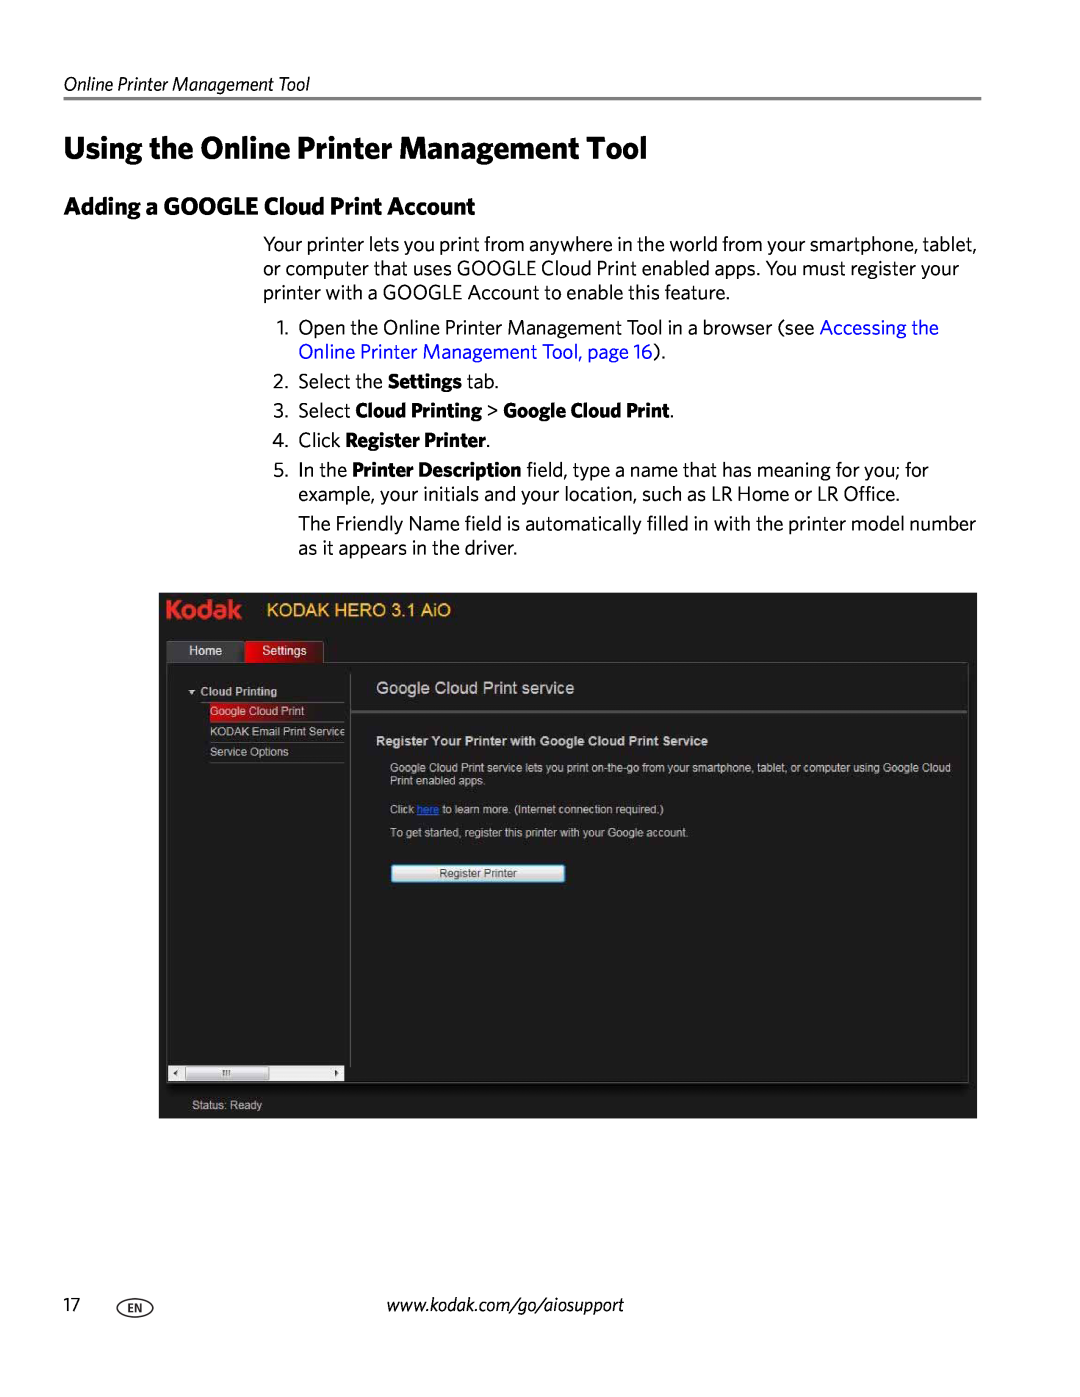 Kodak 3.1 manual Using the Online Printer Management Tool, Adding a GOOGLE Cloud Print Account, Click Register Printer 